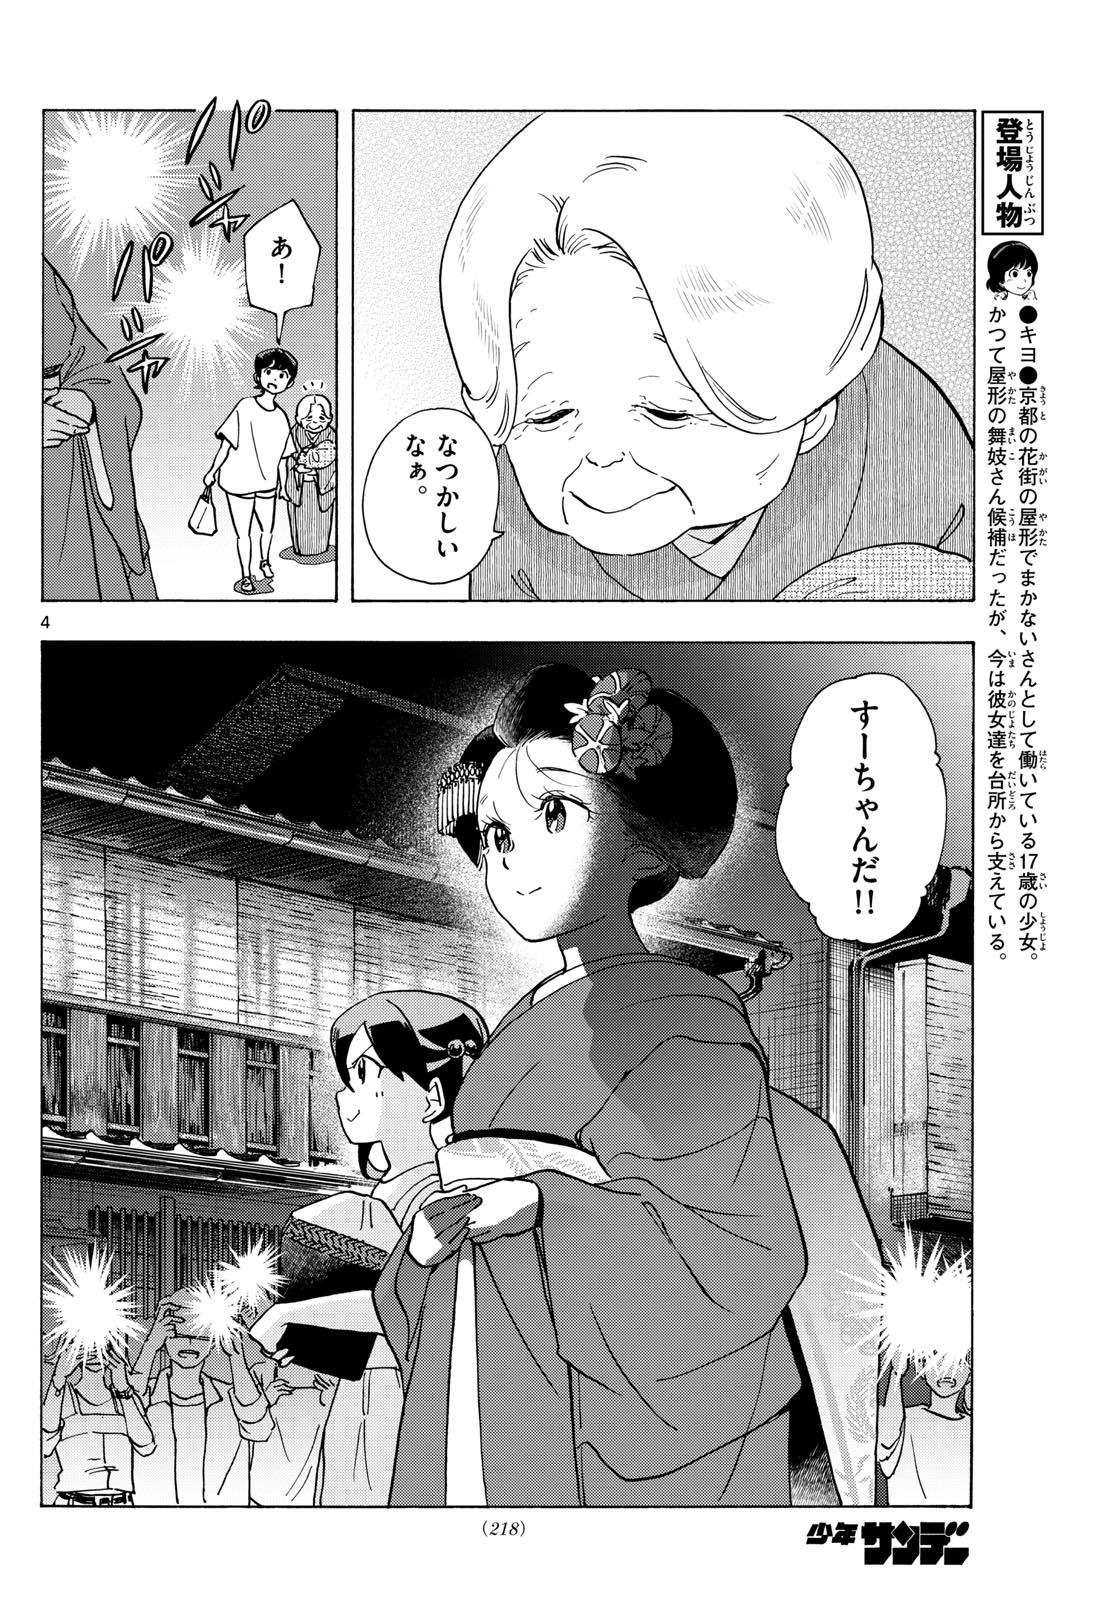 Maiko-san Chi no Makanai-san - Chapter 305 - Page 4